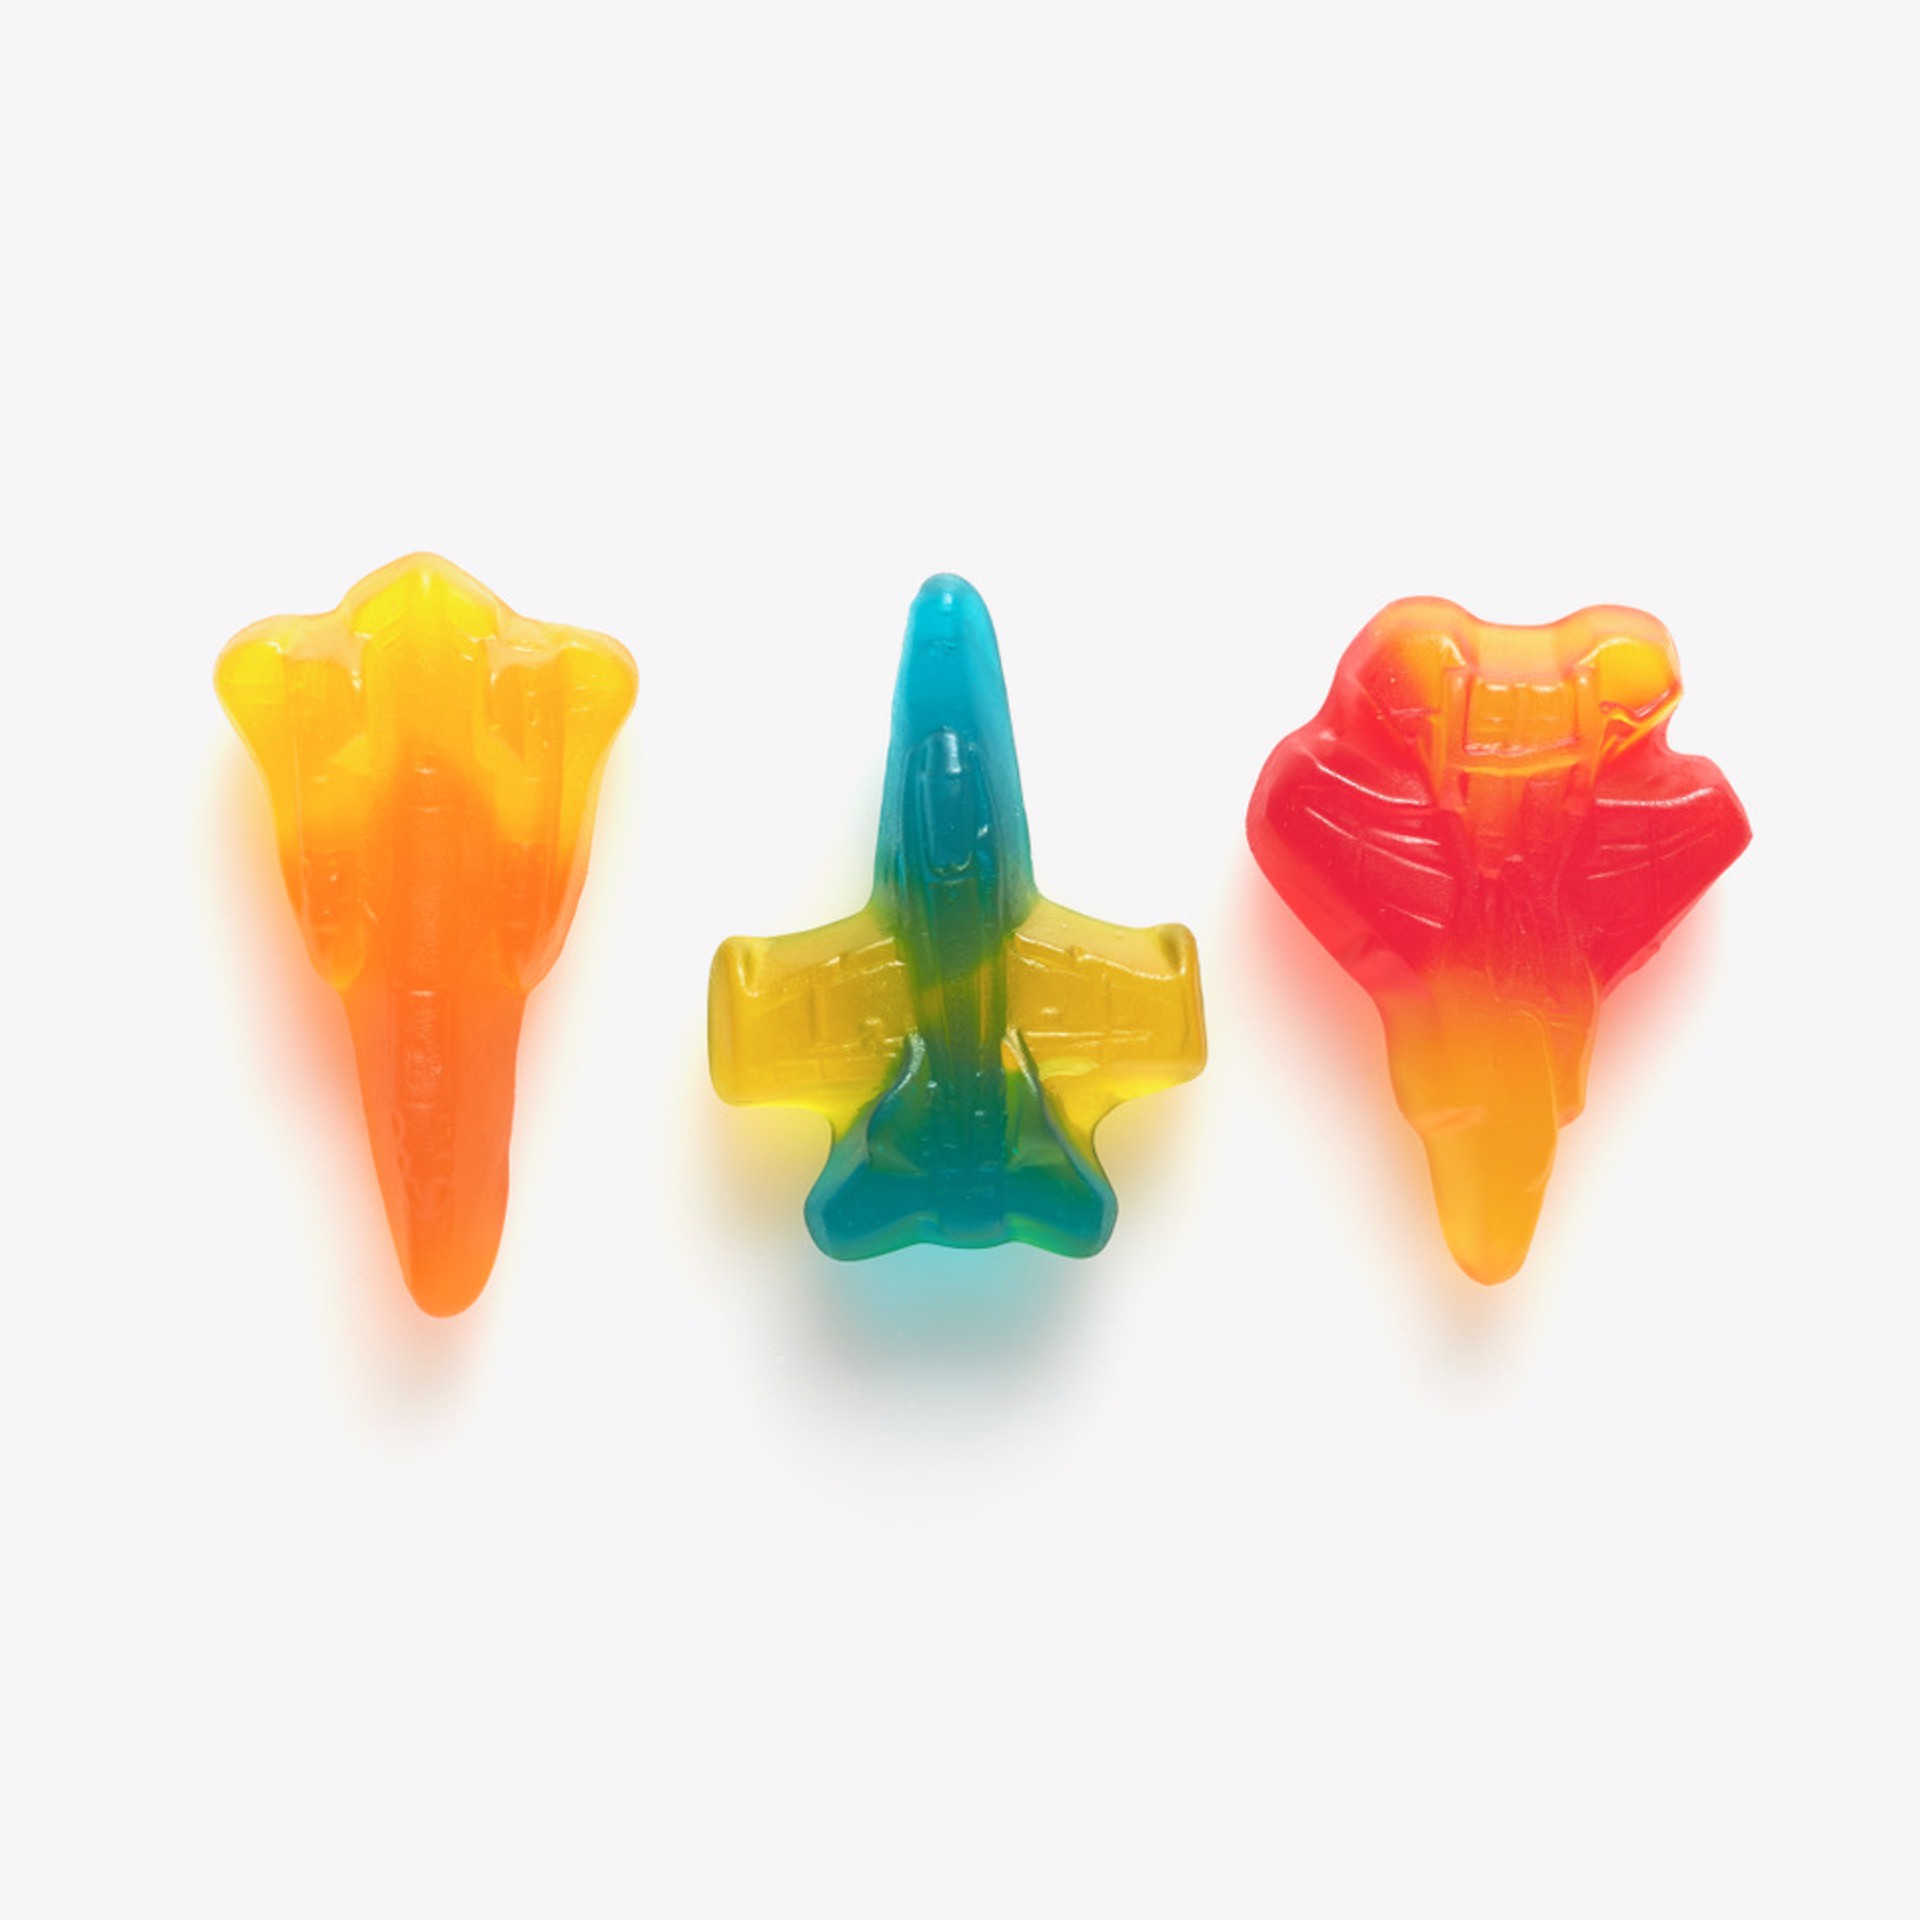 Gummi Jet Fighters by Peter Andrew Lusztyk / Refined Sugar